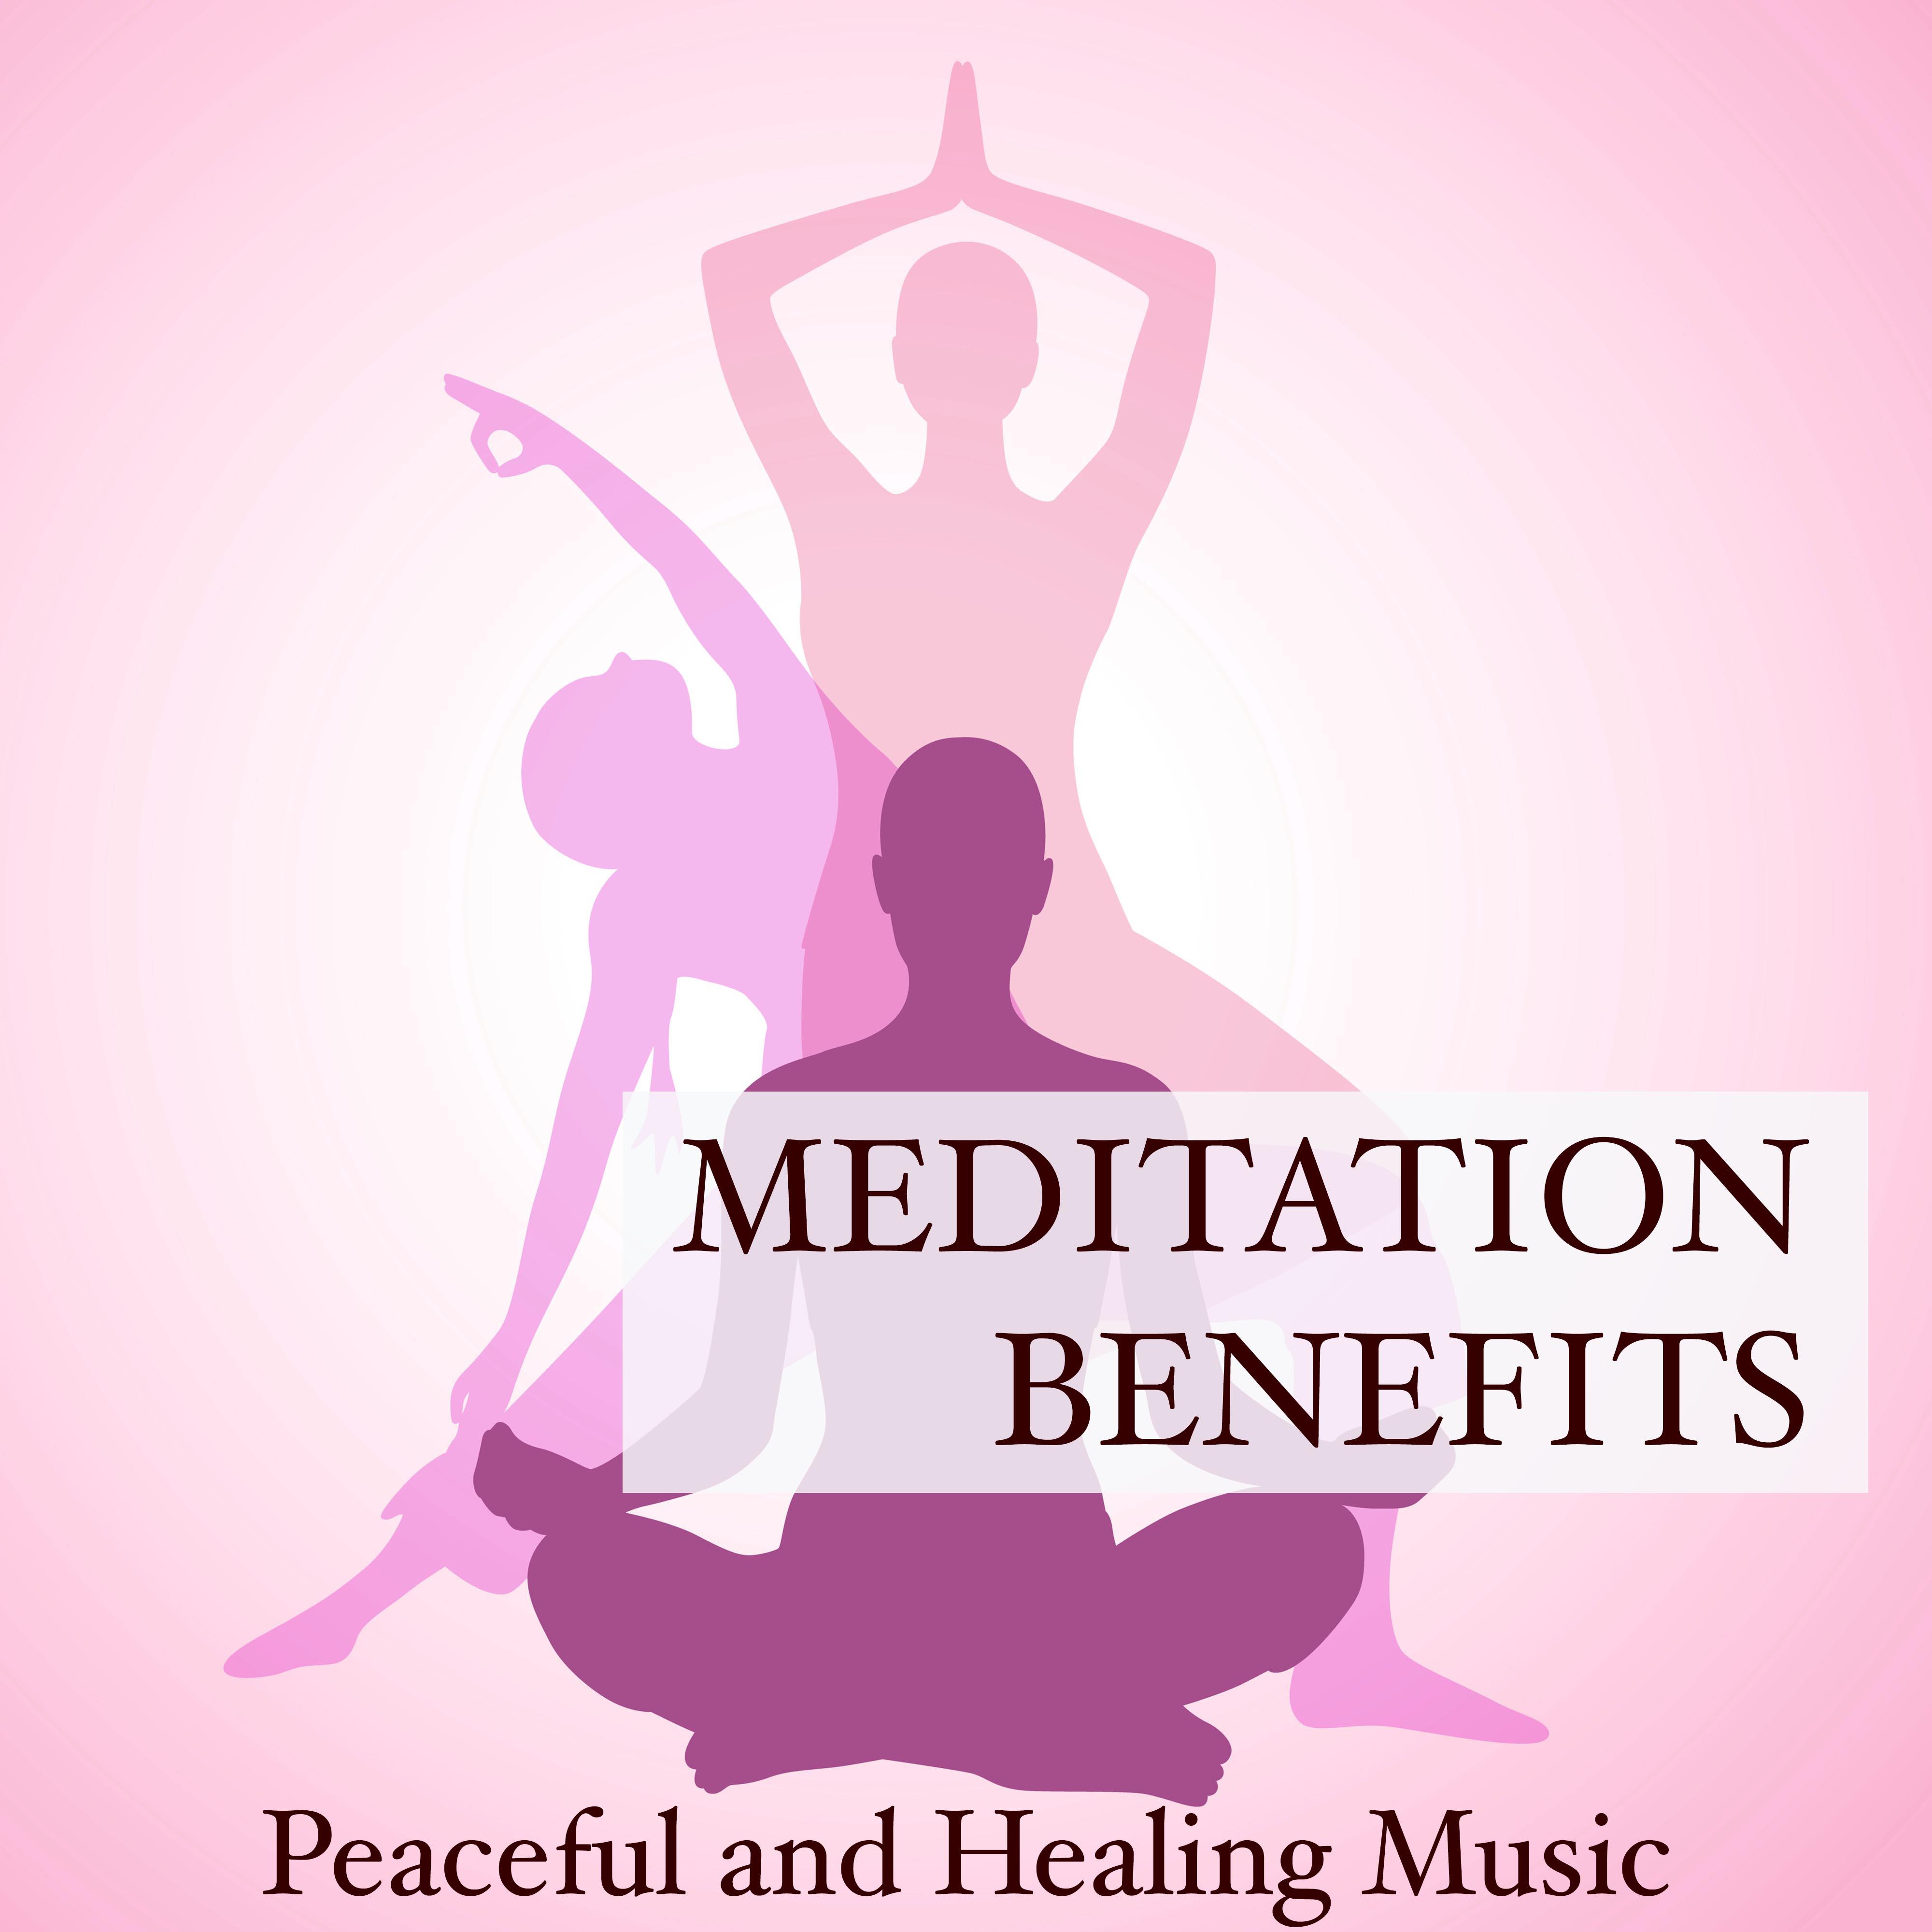 Meditation Benefits: Peaceful and Healing Music